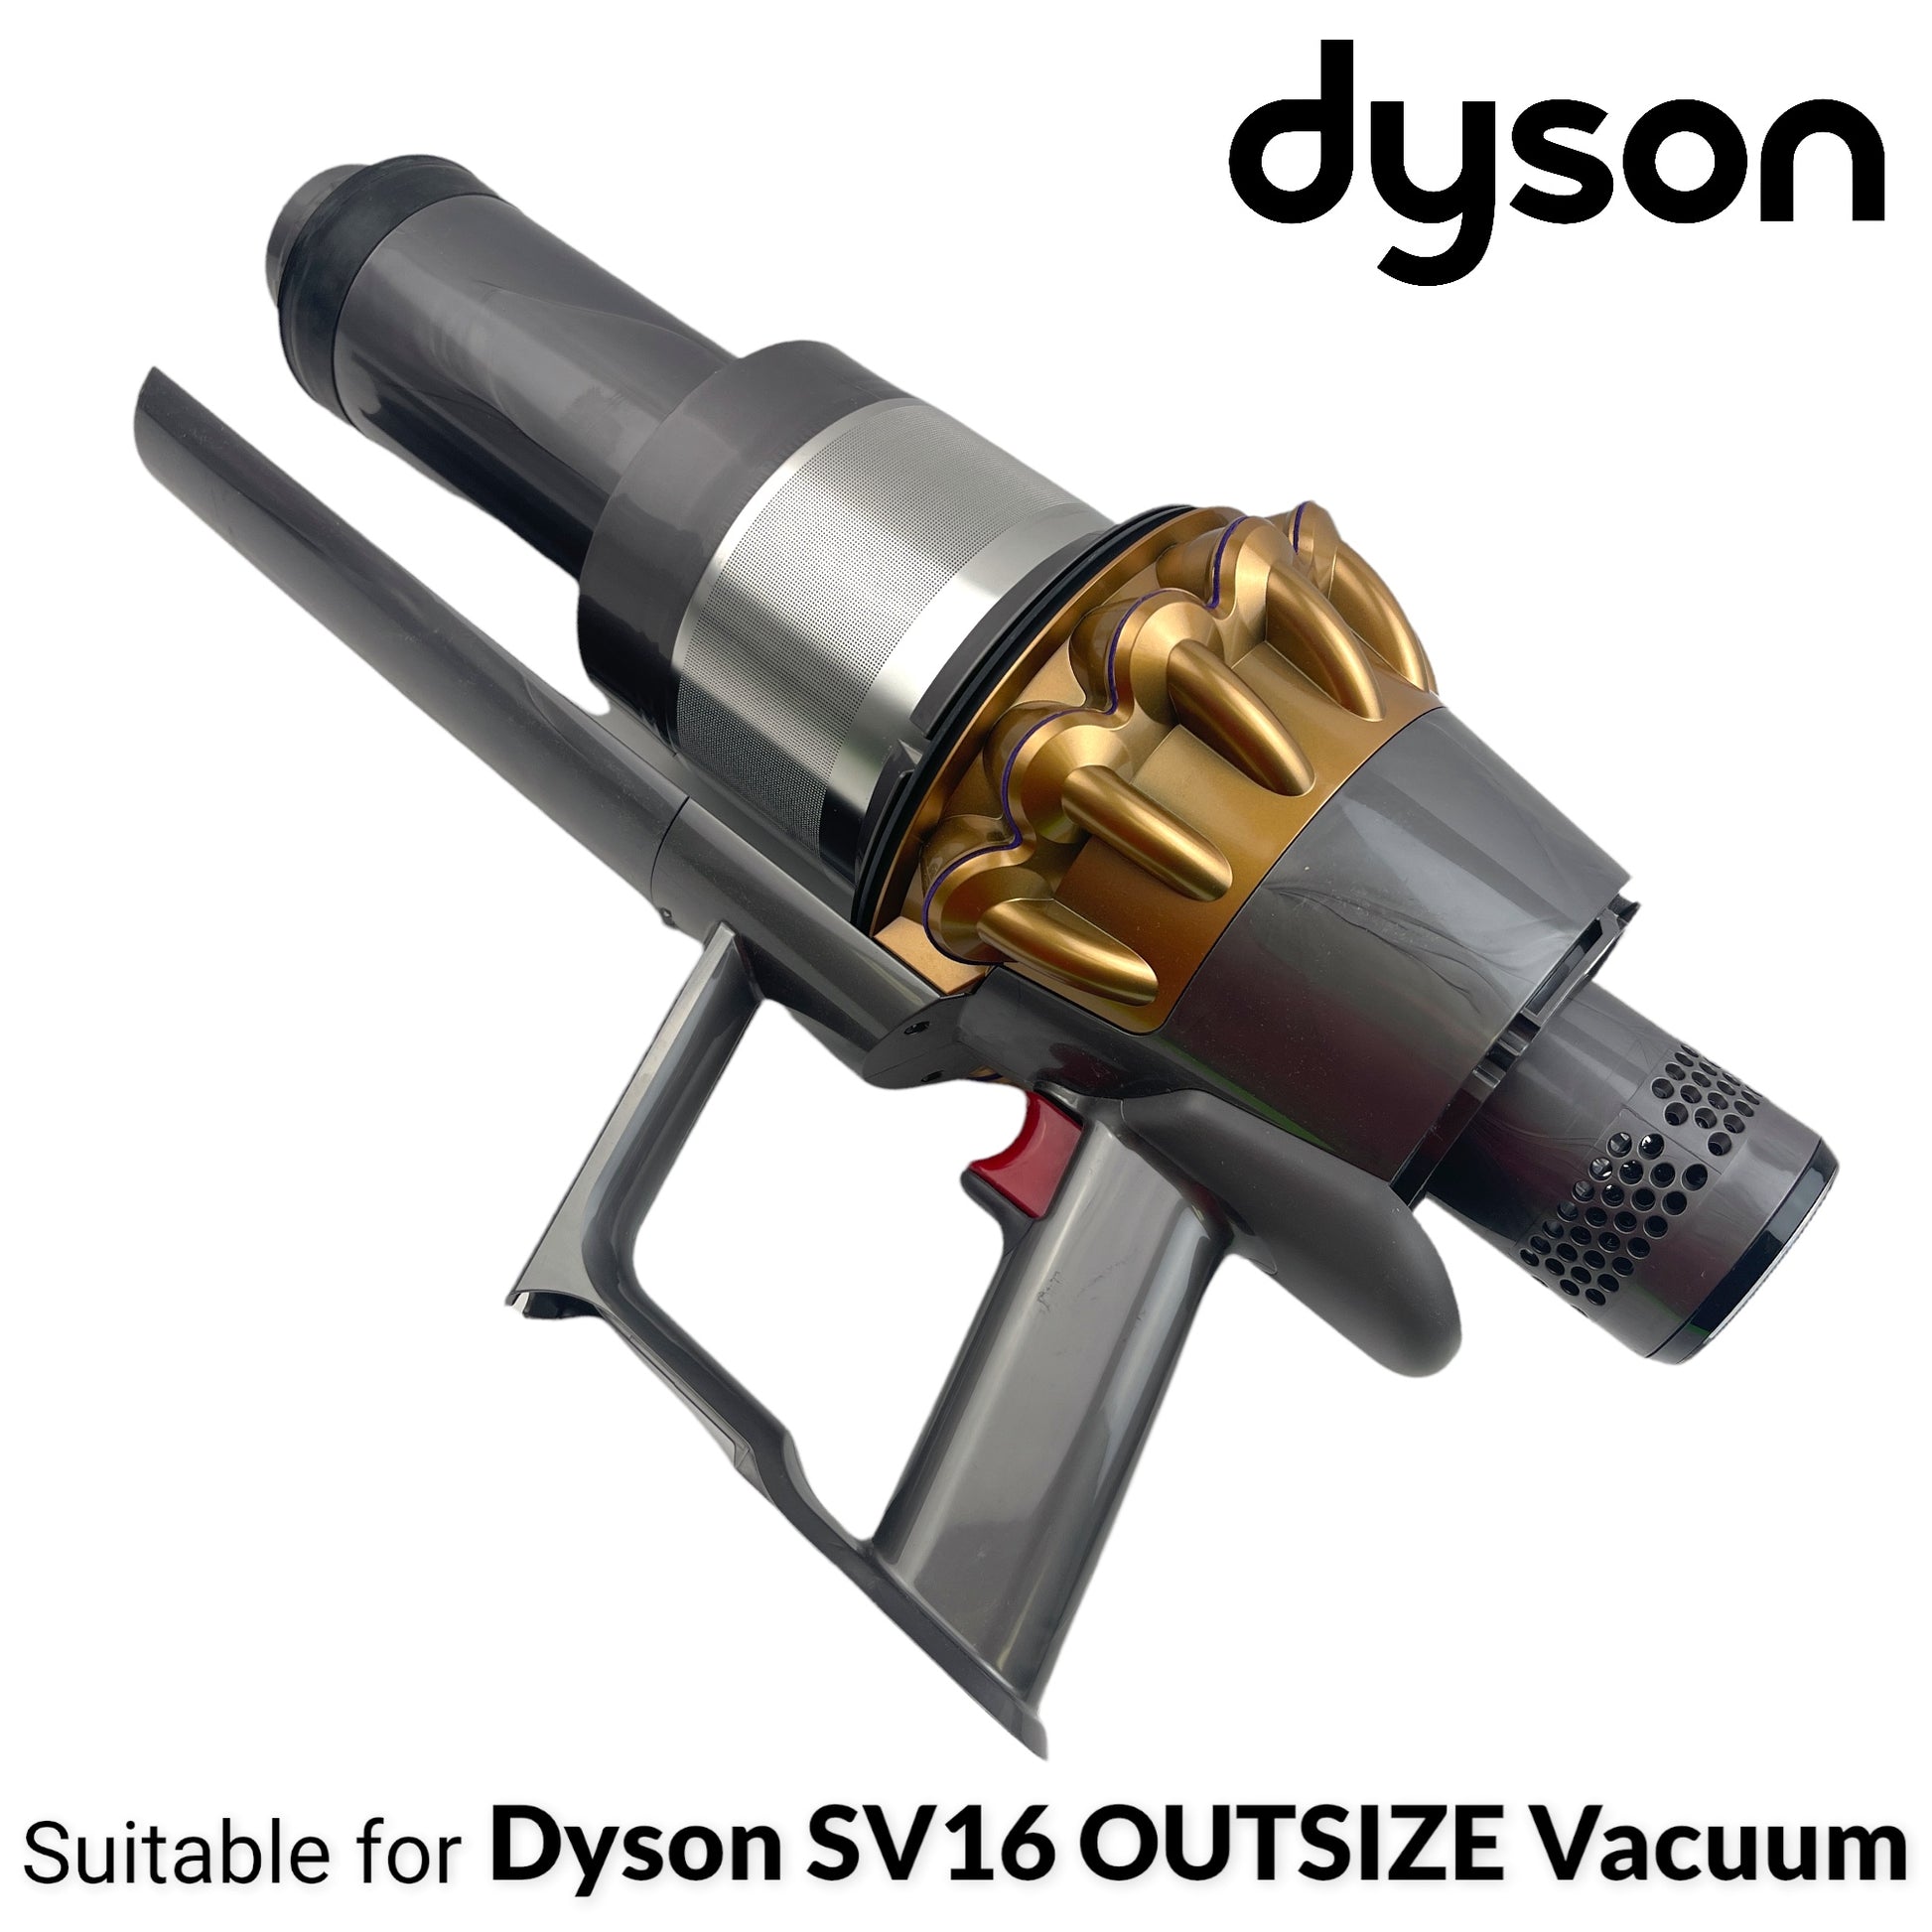 VIRSHX BATT Dyson V6 Cyclone Serisi için 3lü Paket V6 Yedek Filtre